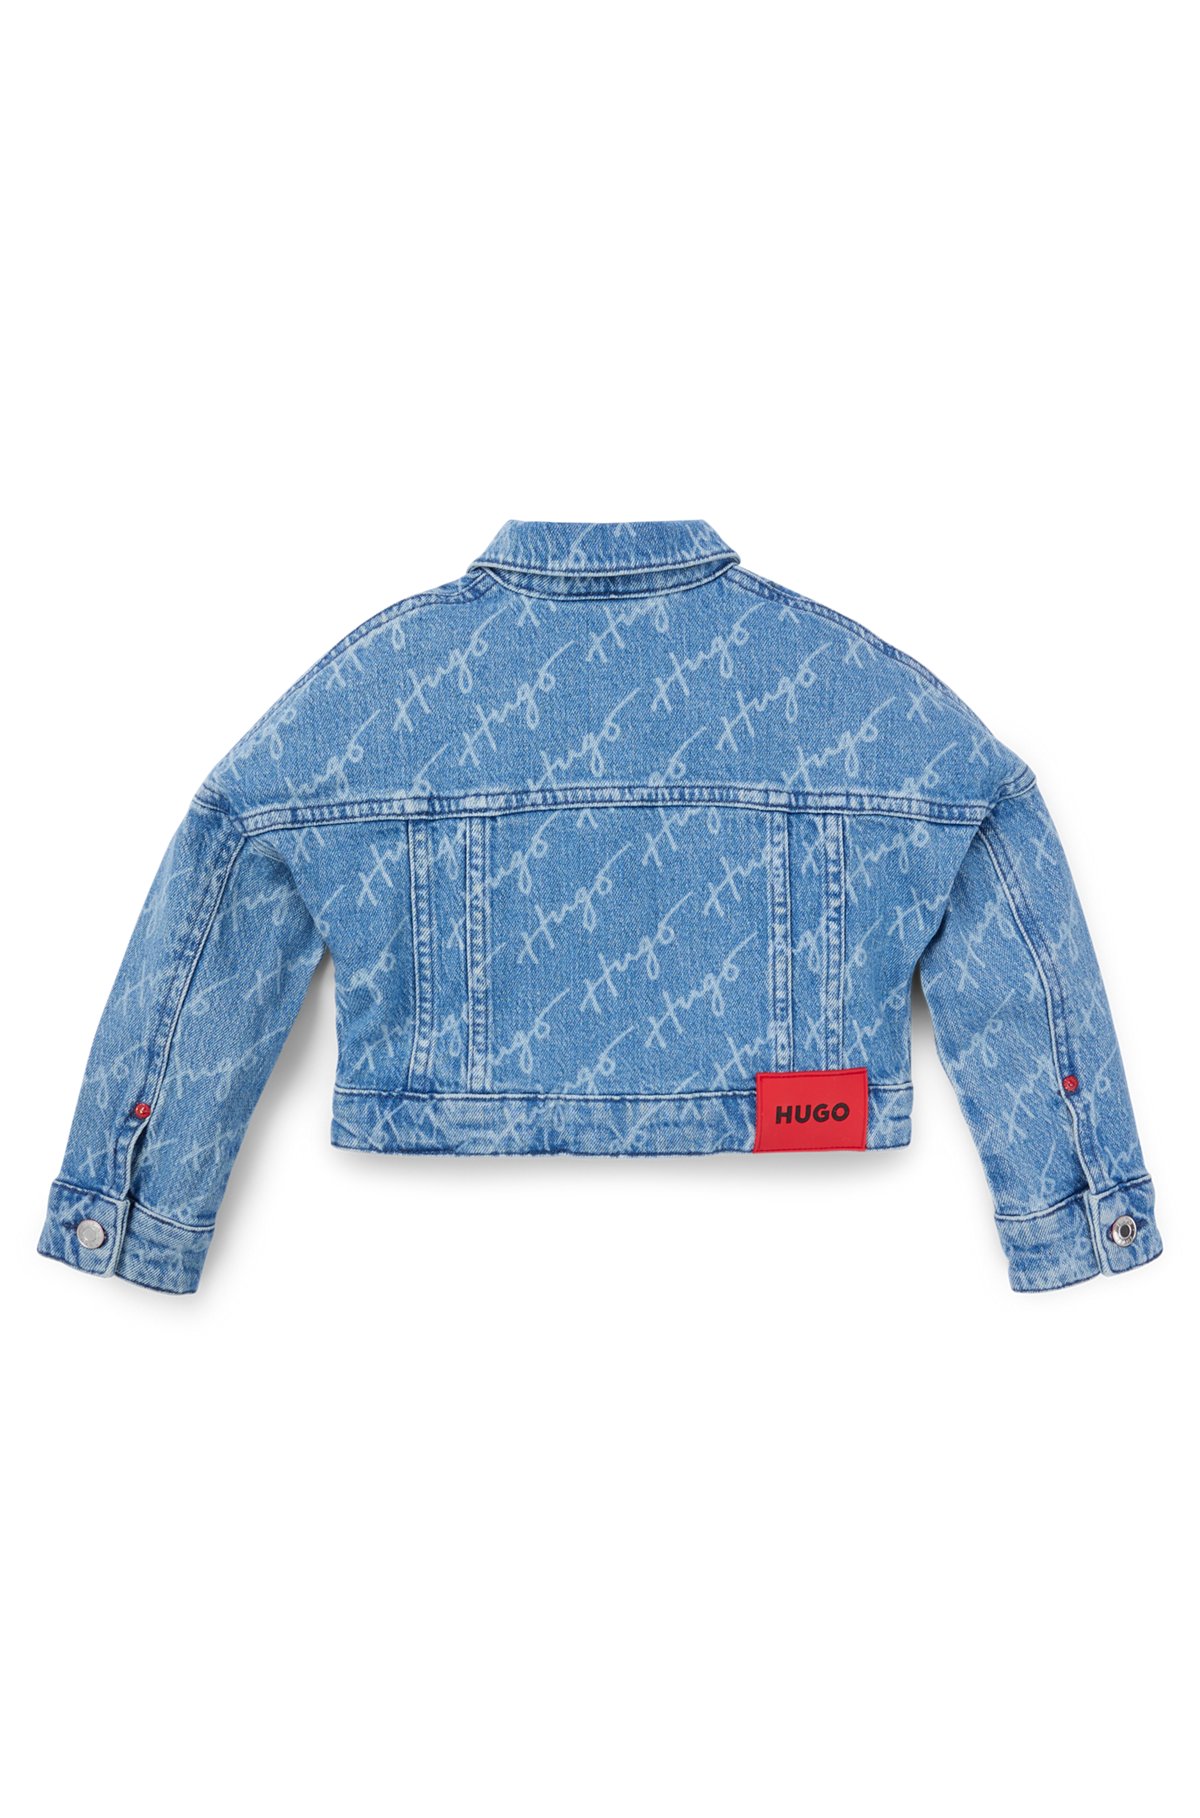 Kids' blue-denim jacket with handwritten logo motif, Patterned